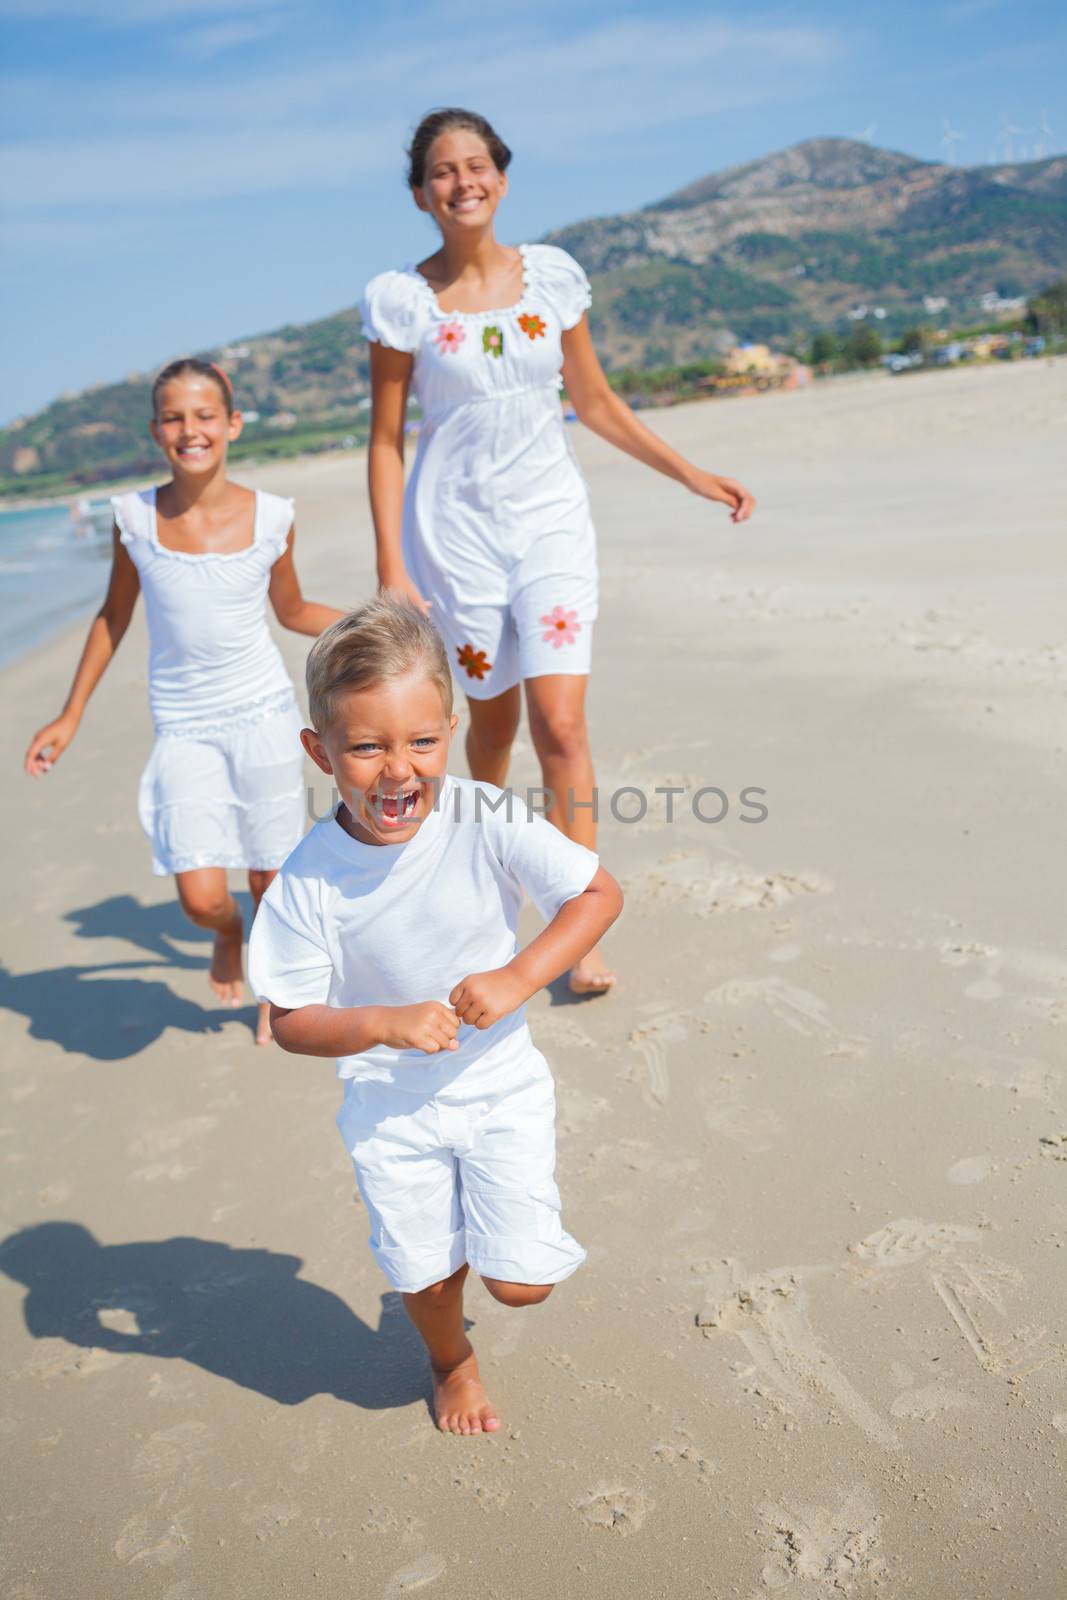 Cute kids on the beach by maxoliki